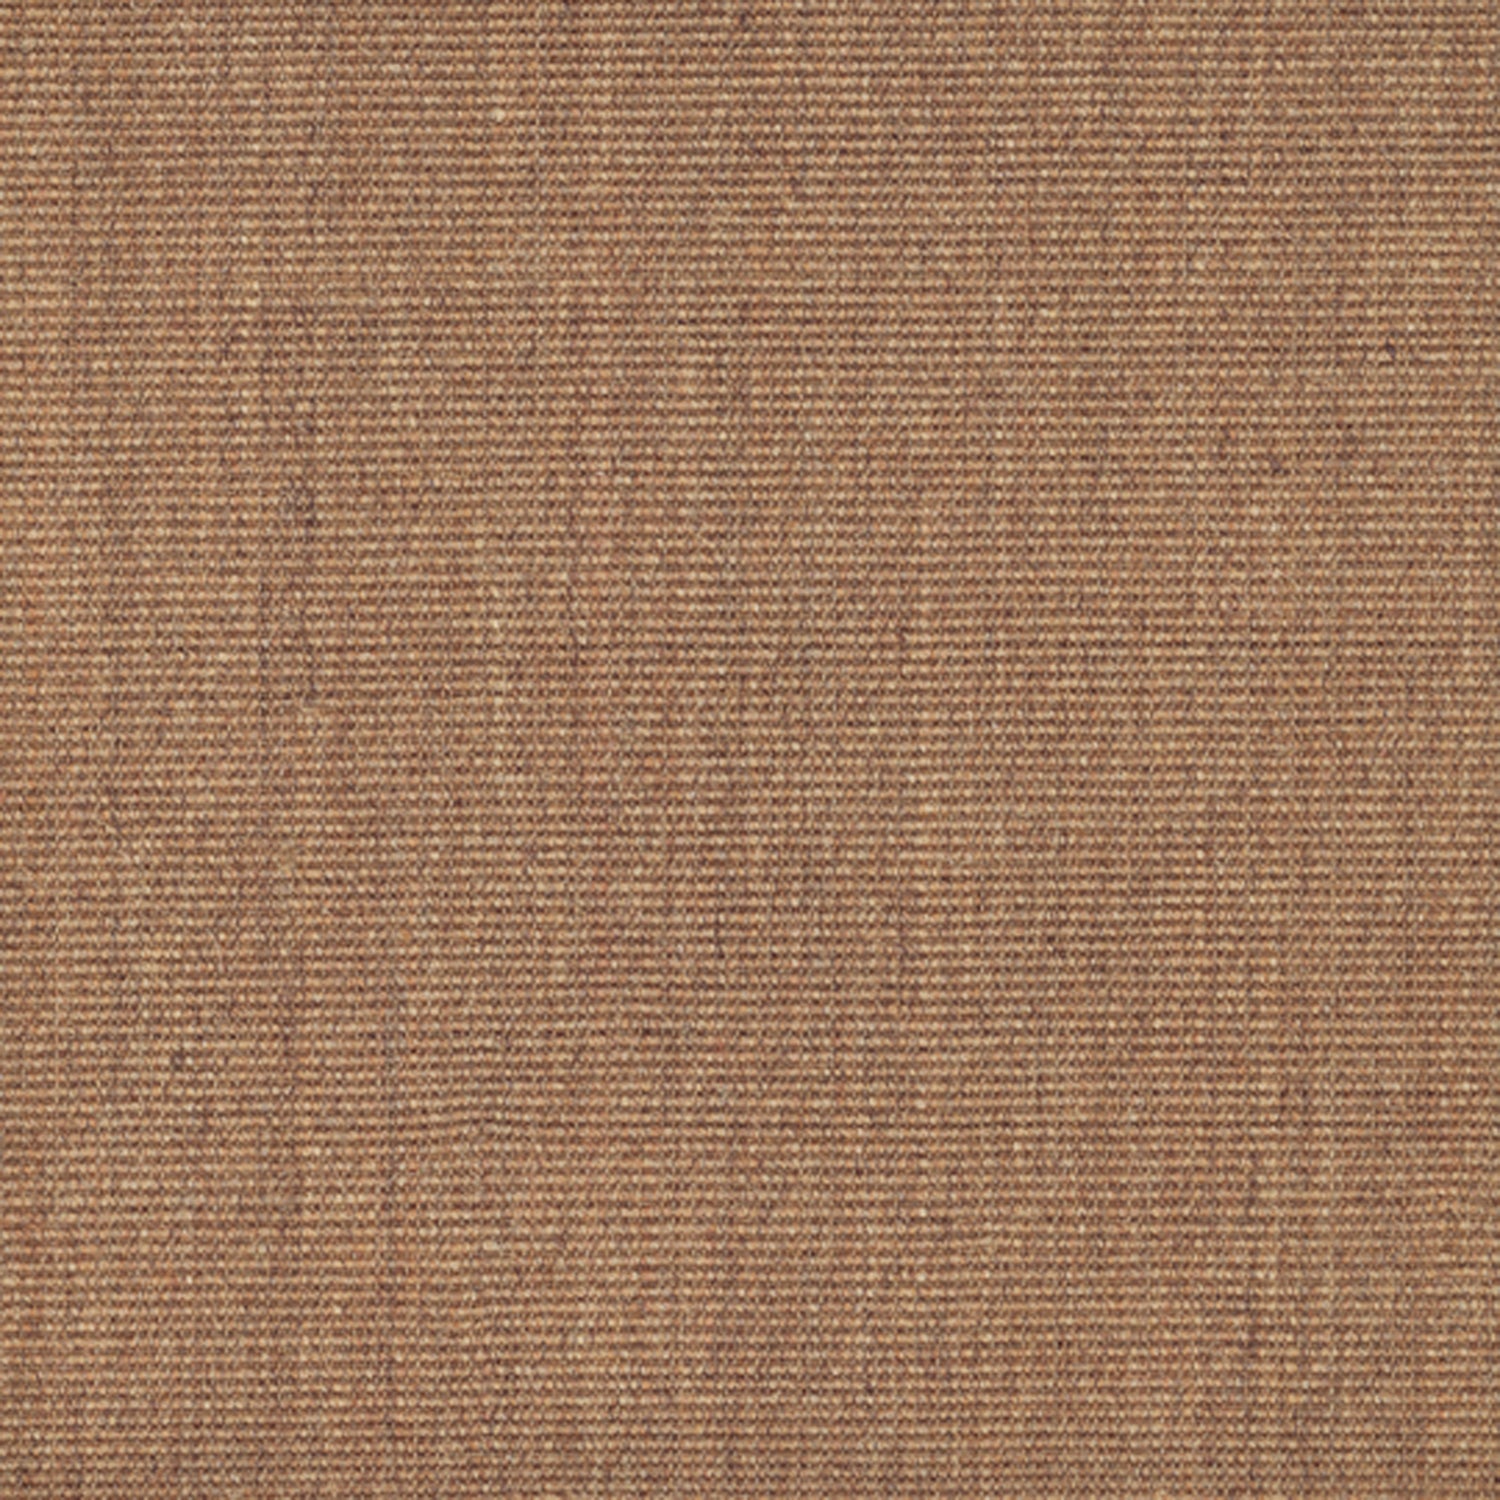 Sisal broadloom carpet swatch in a ribbed weave in "Macadanea" sable.